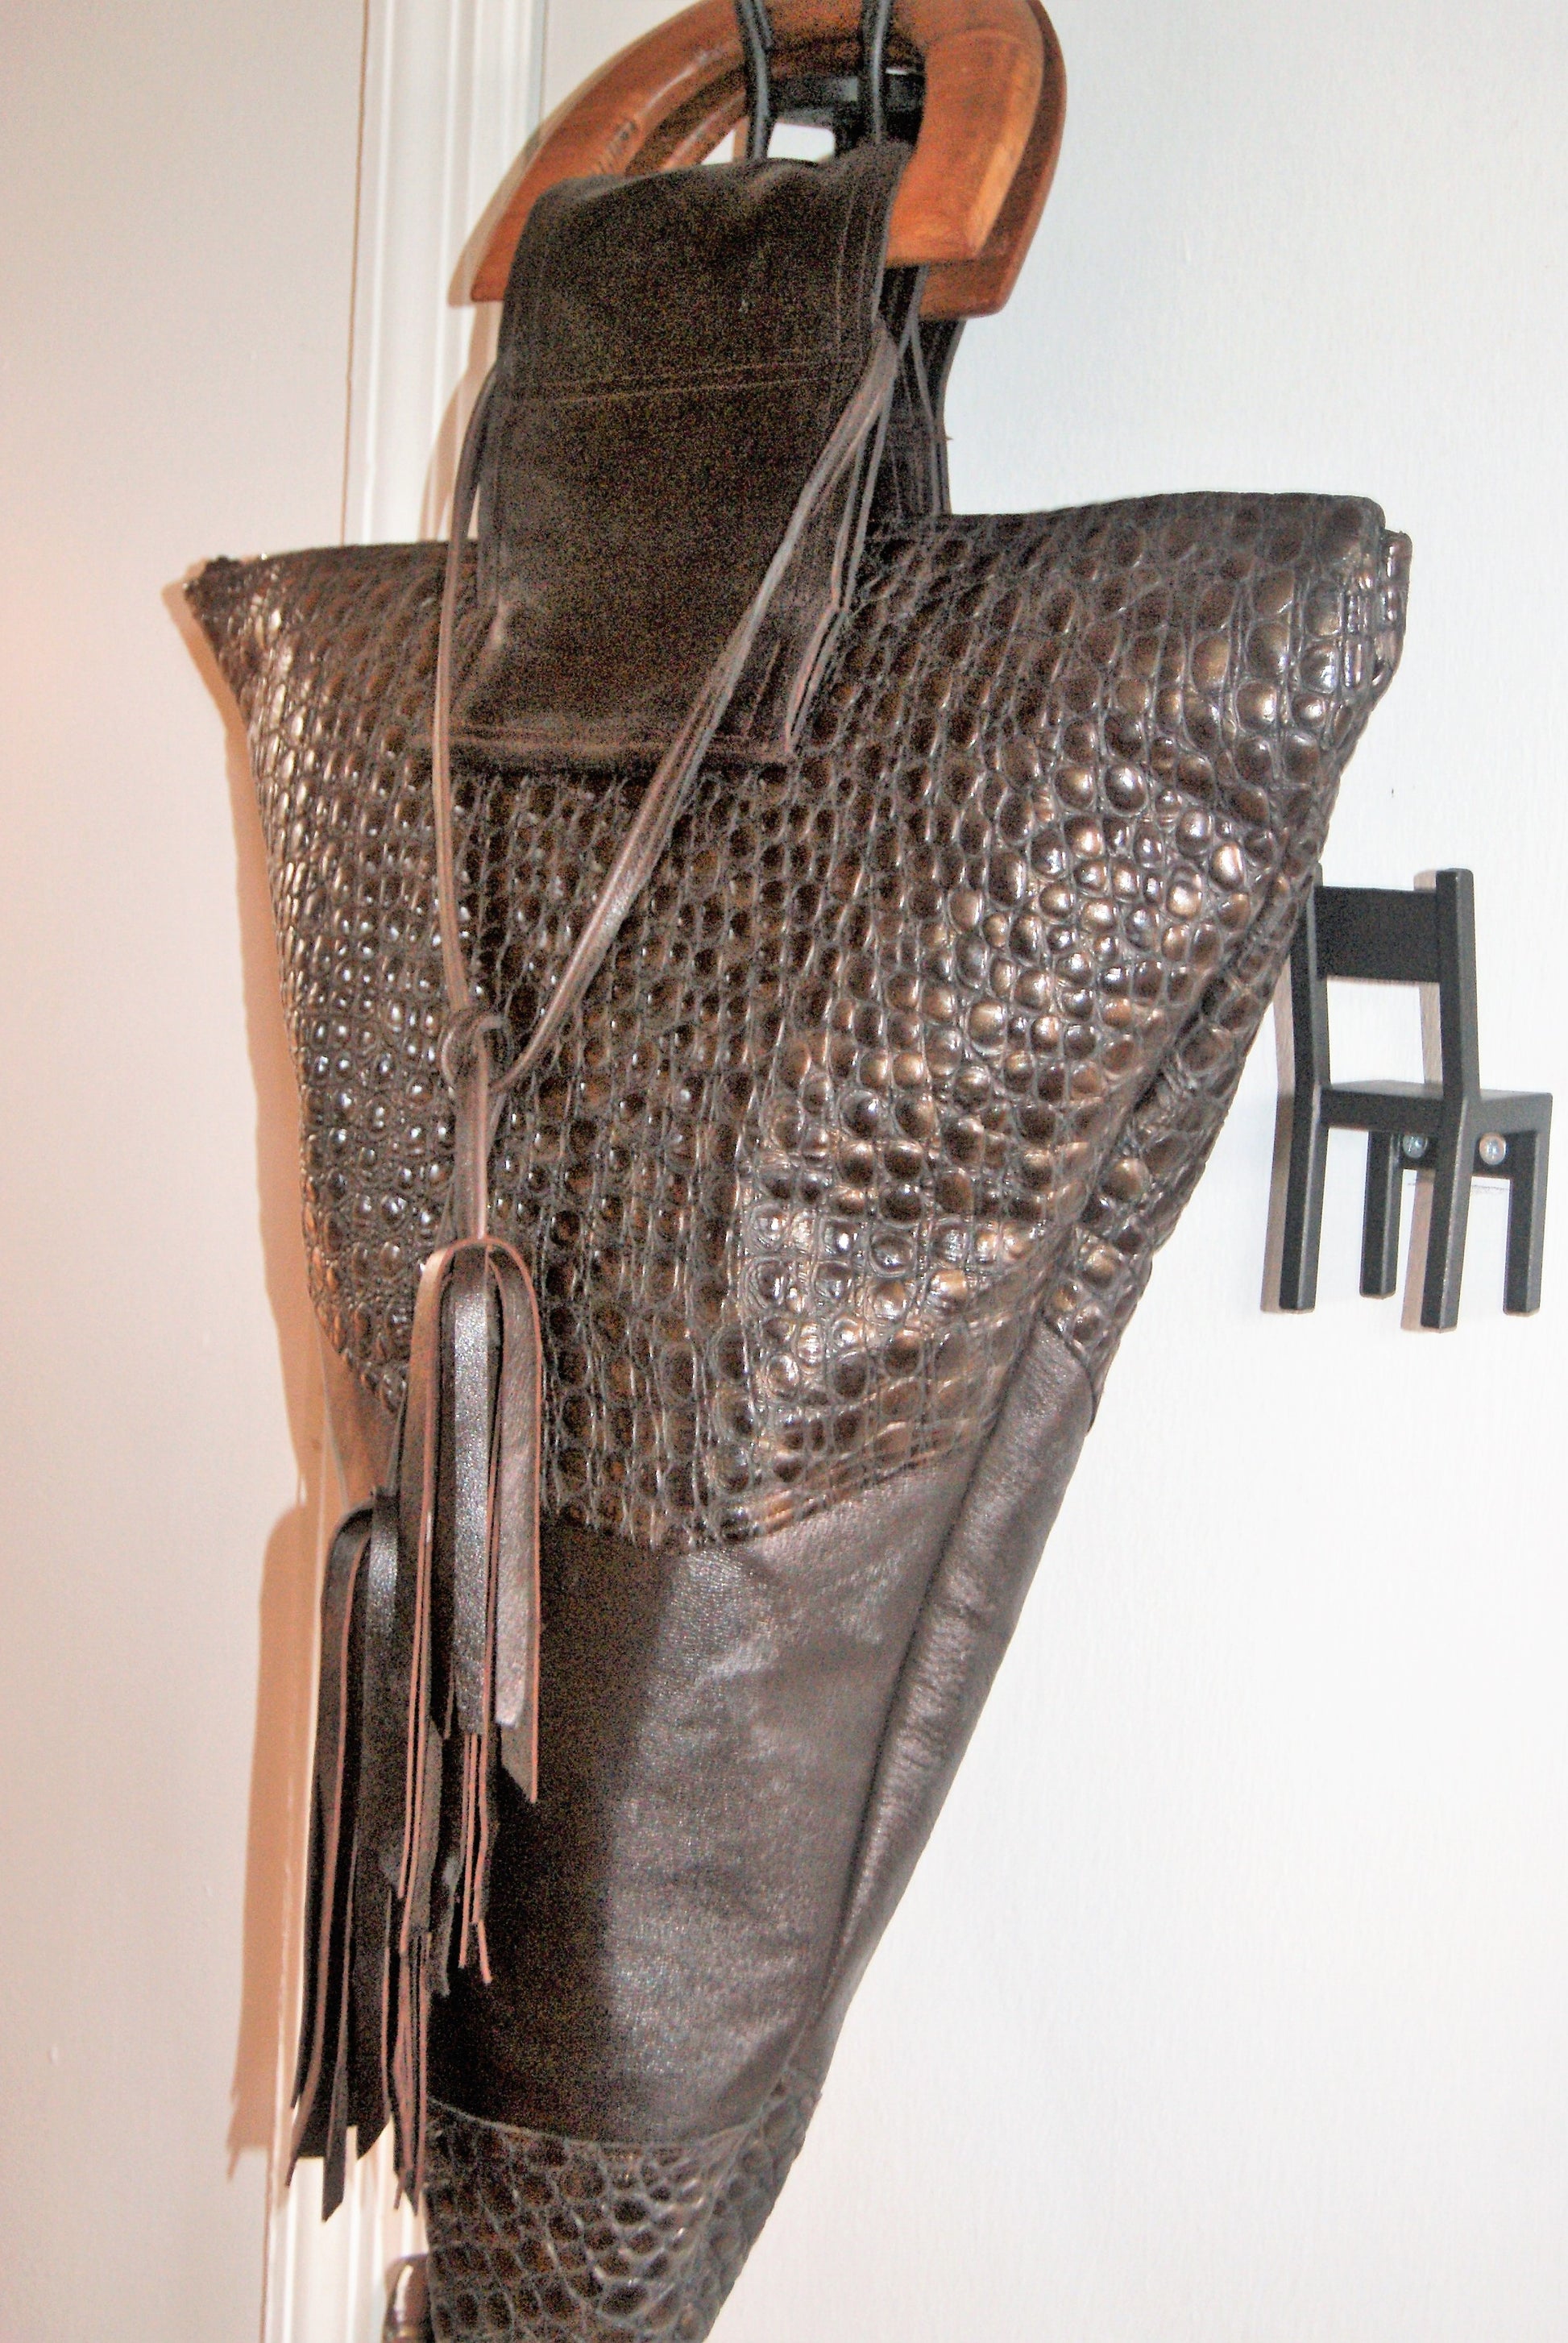 The Queen, Crocodile Leather Handbag Tote